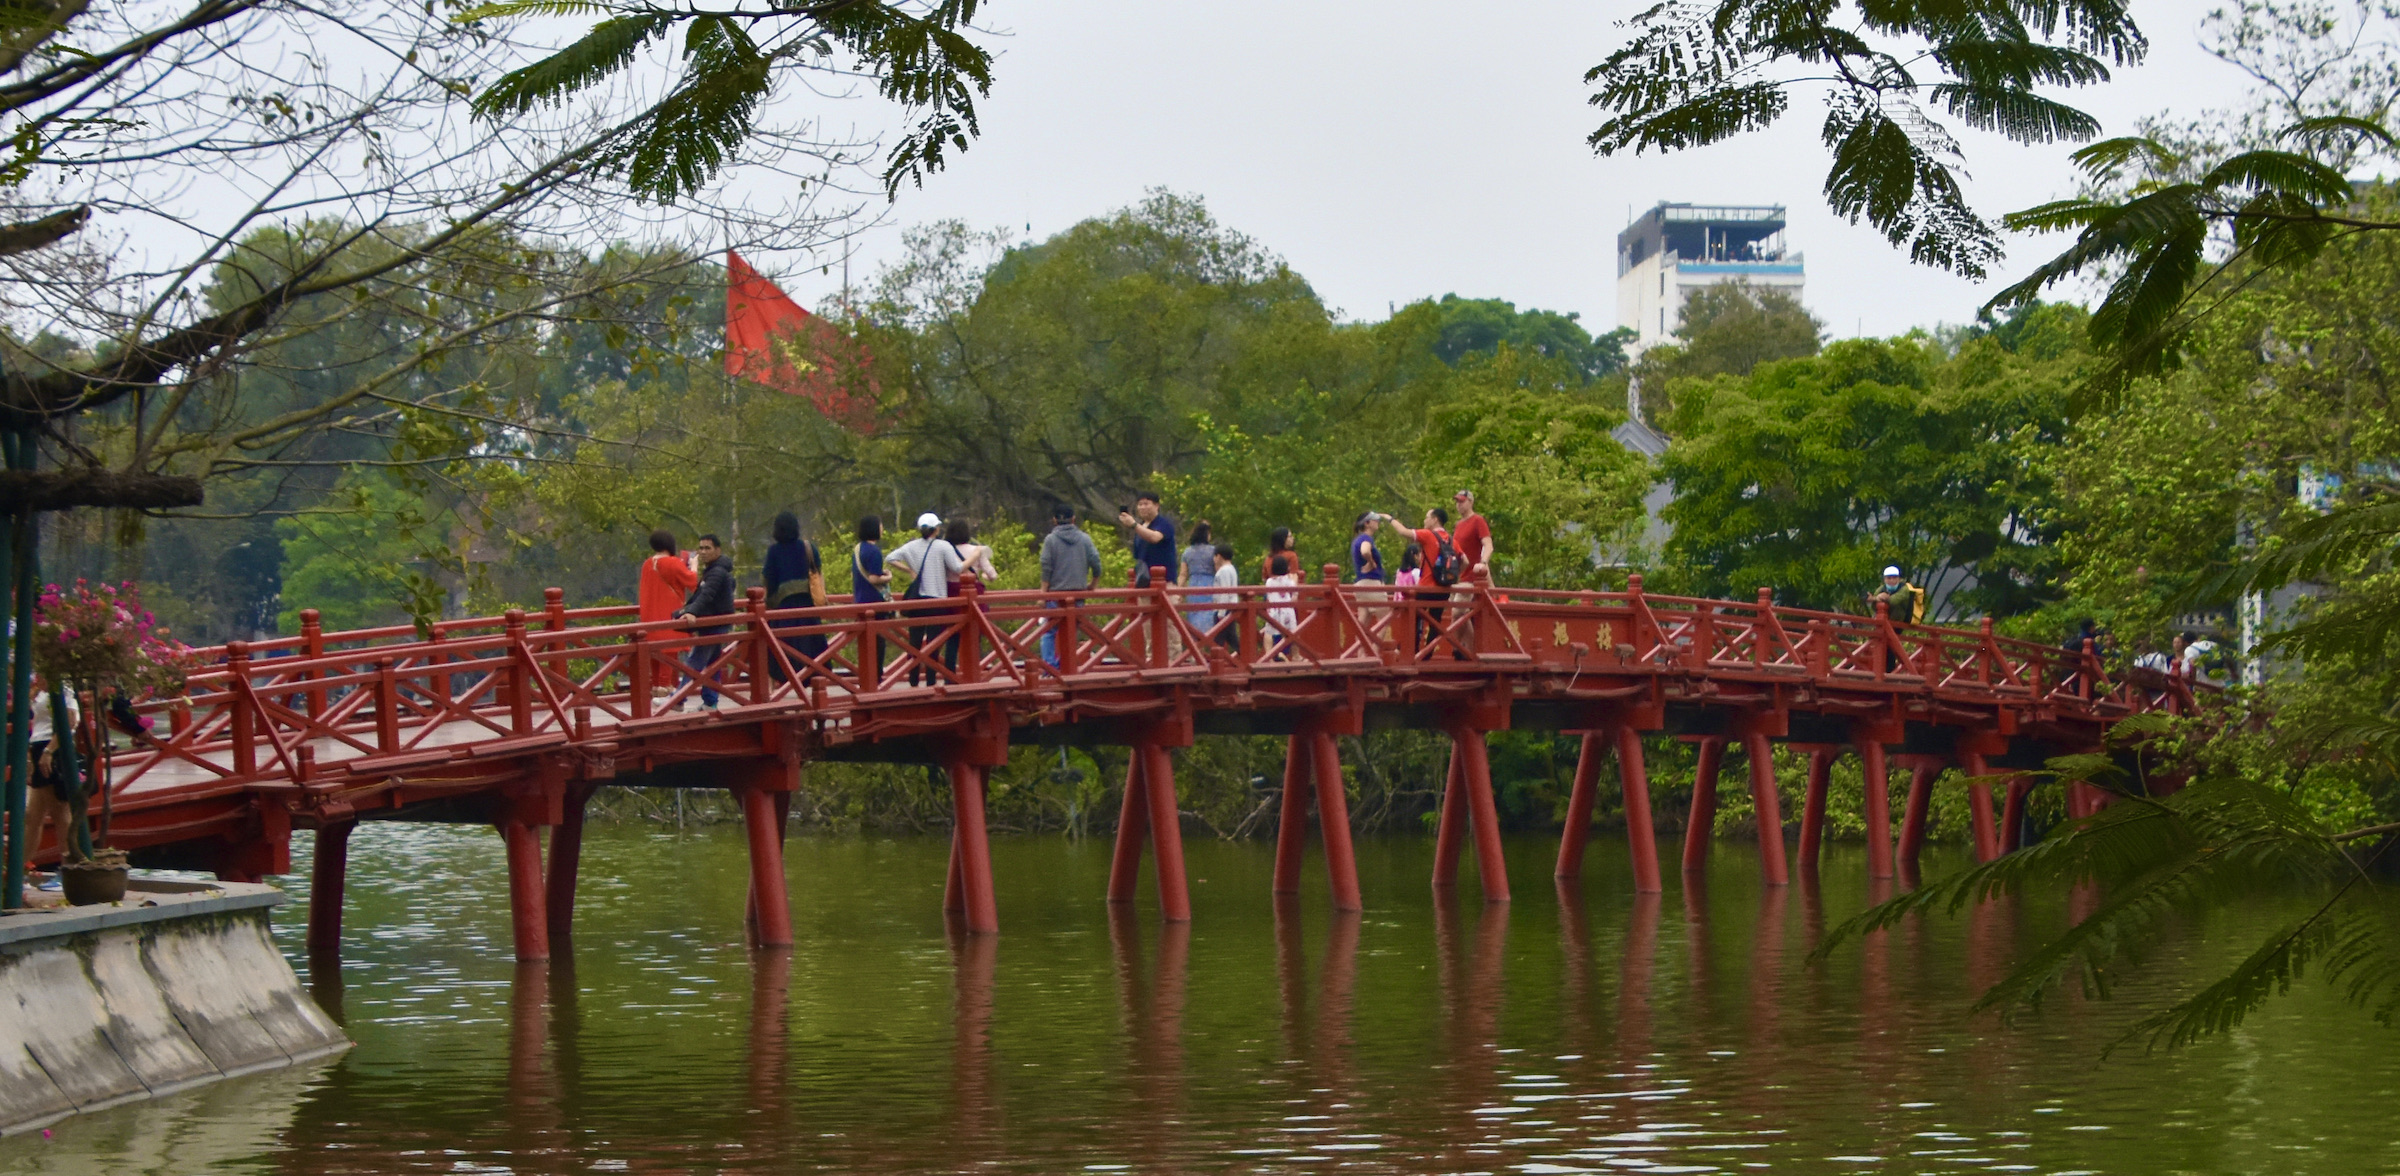 The Huc Bridge, Hanoi